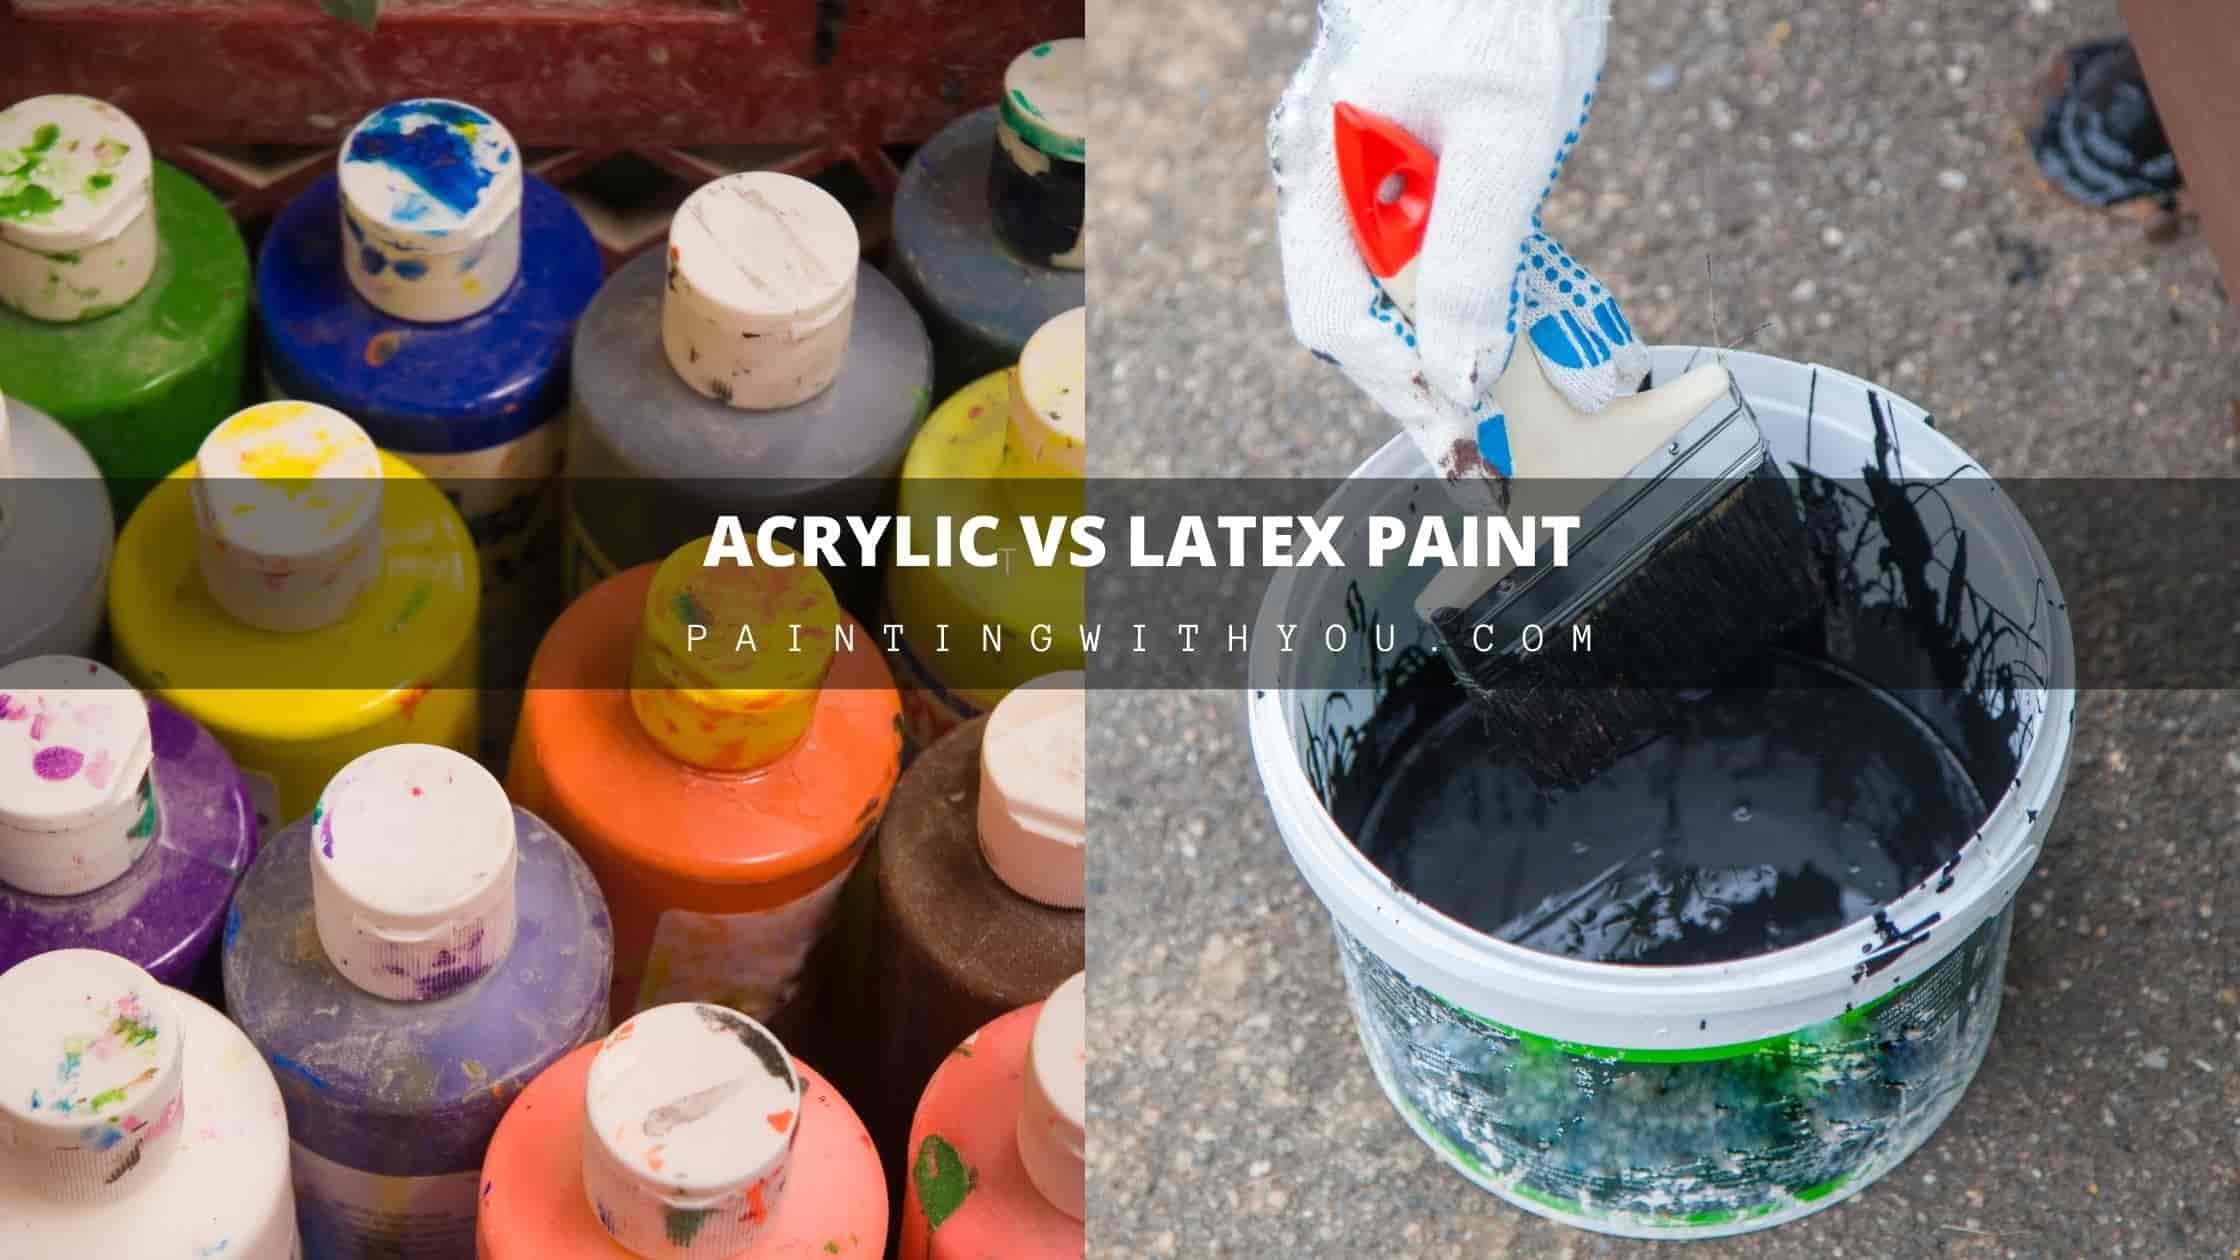 Acrylic vs latex paint